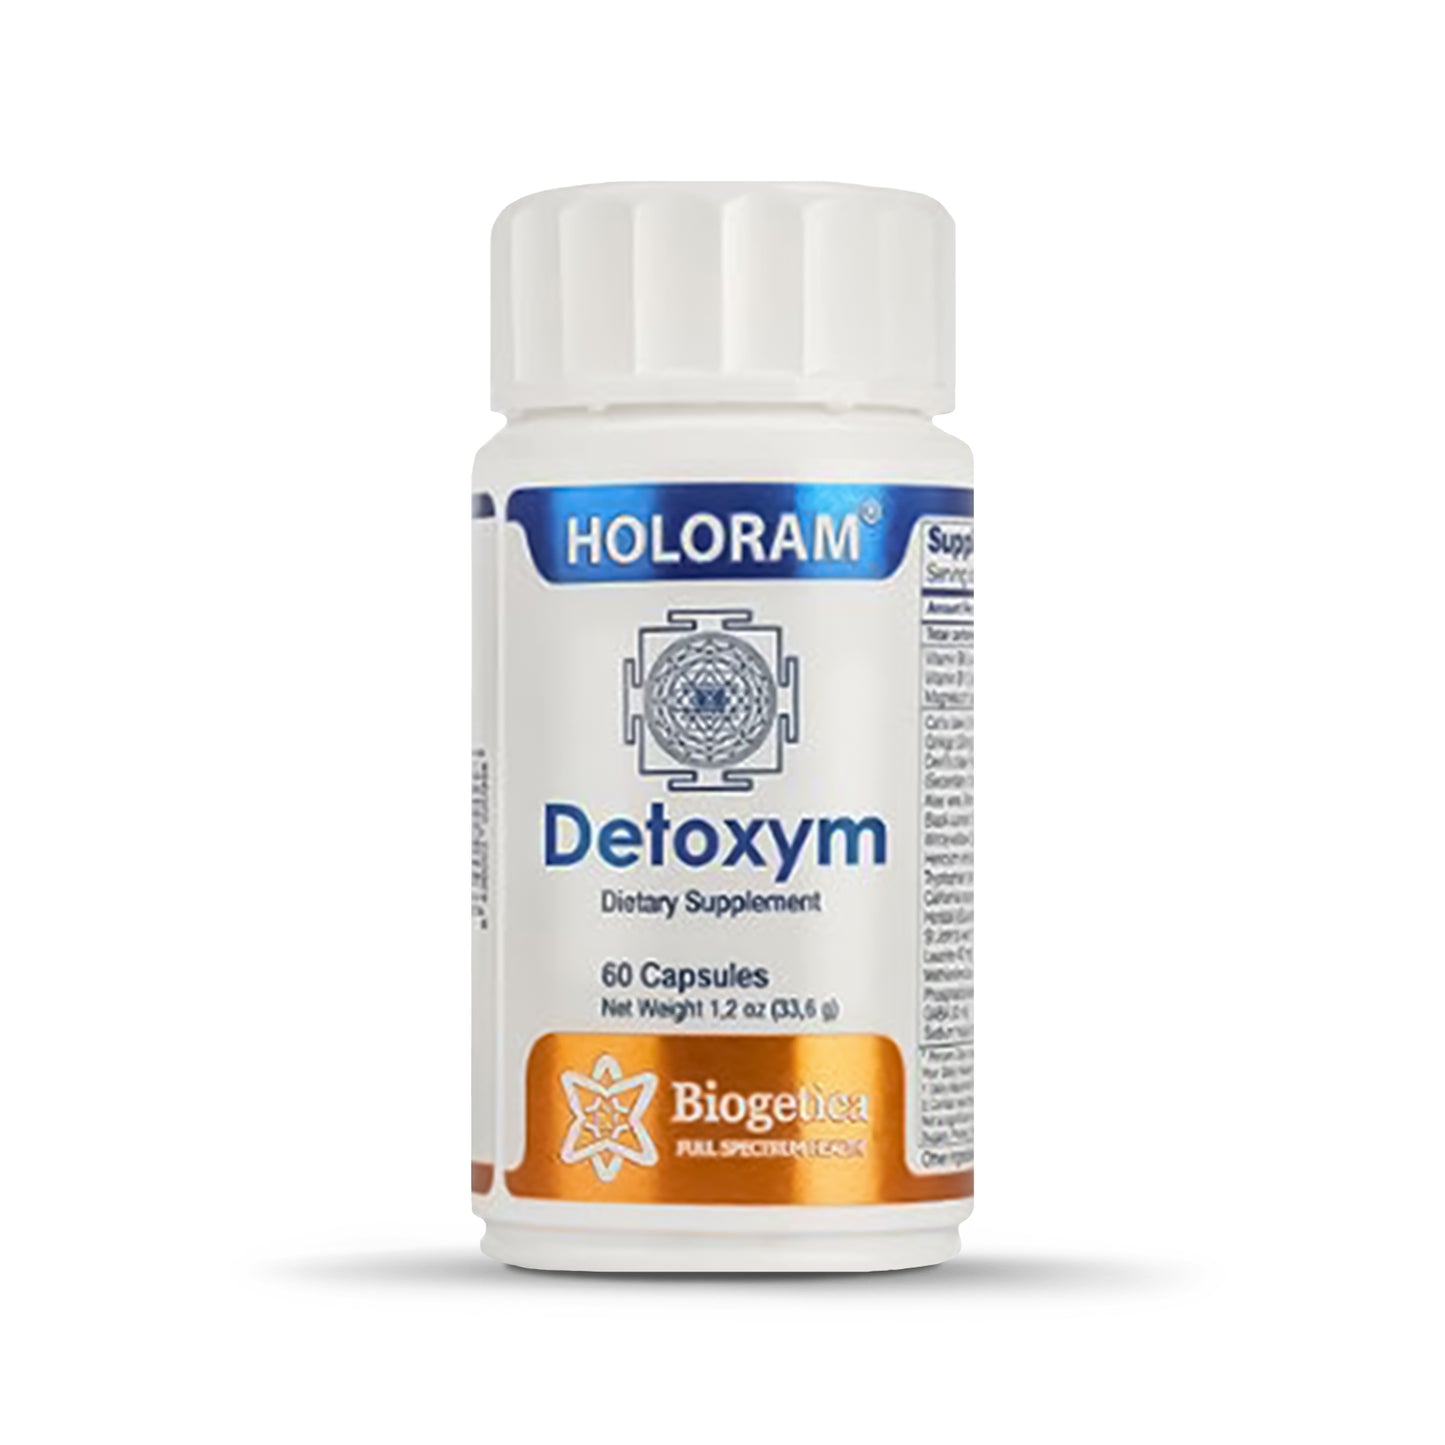 Biogetica Holoram Detoxym, 60 Capsules